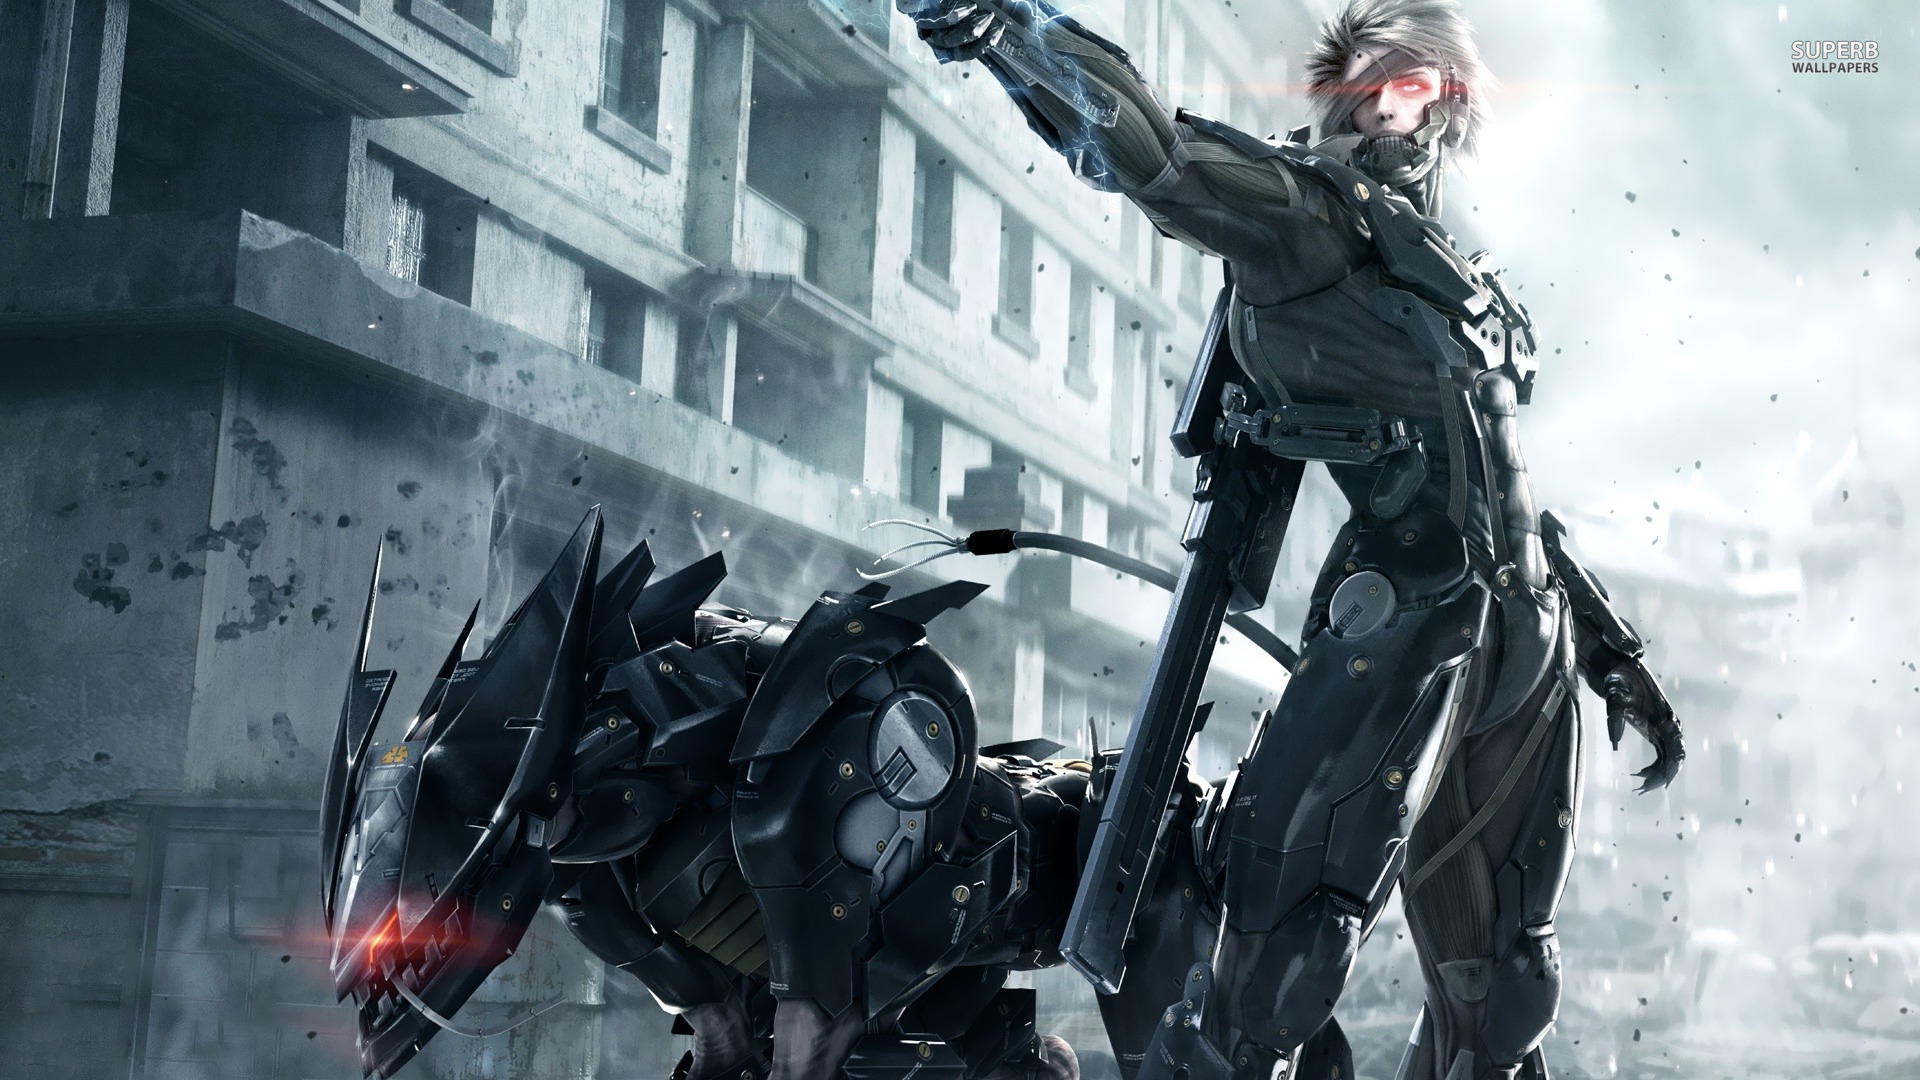 Download Metal Gear Rising Raiden Wallpaper HD pictures in high